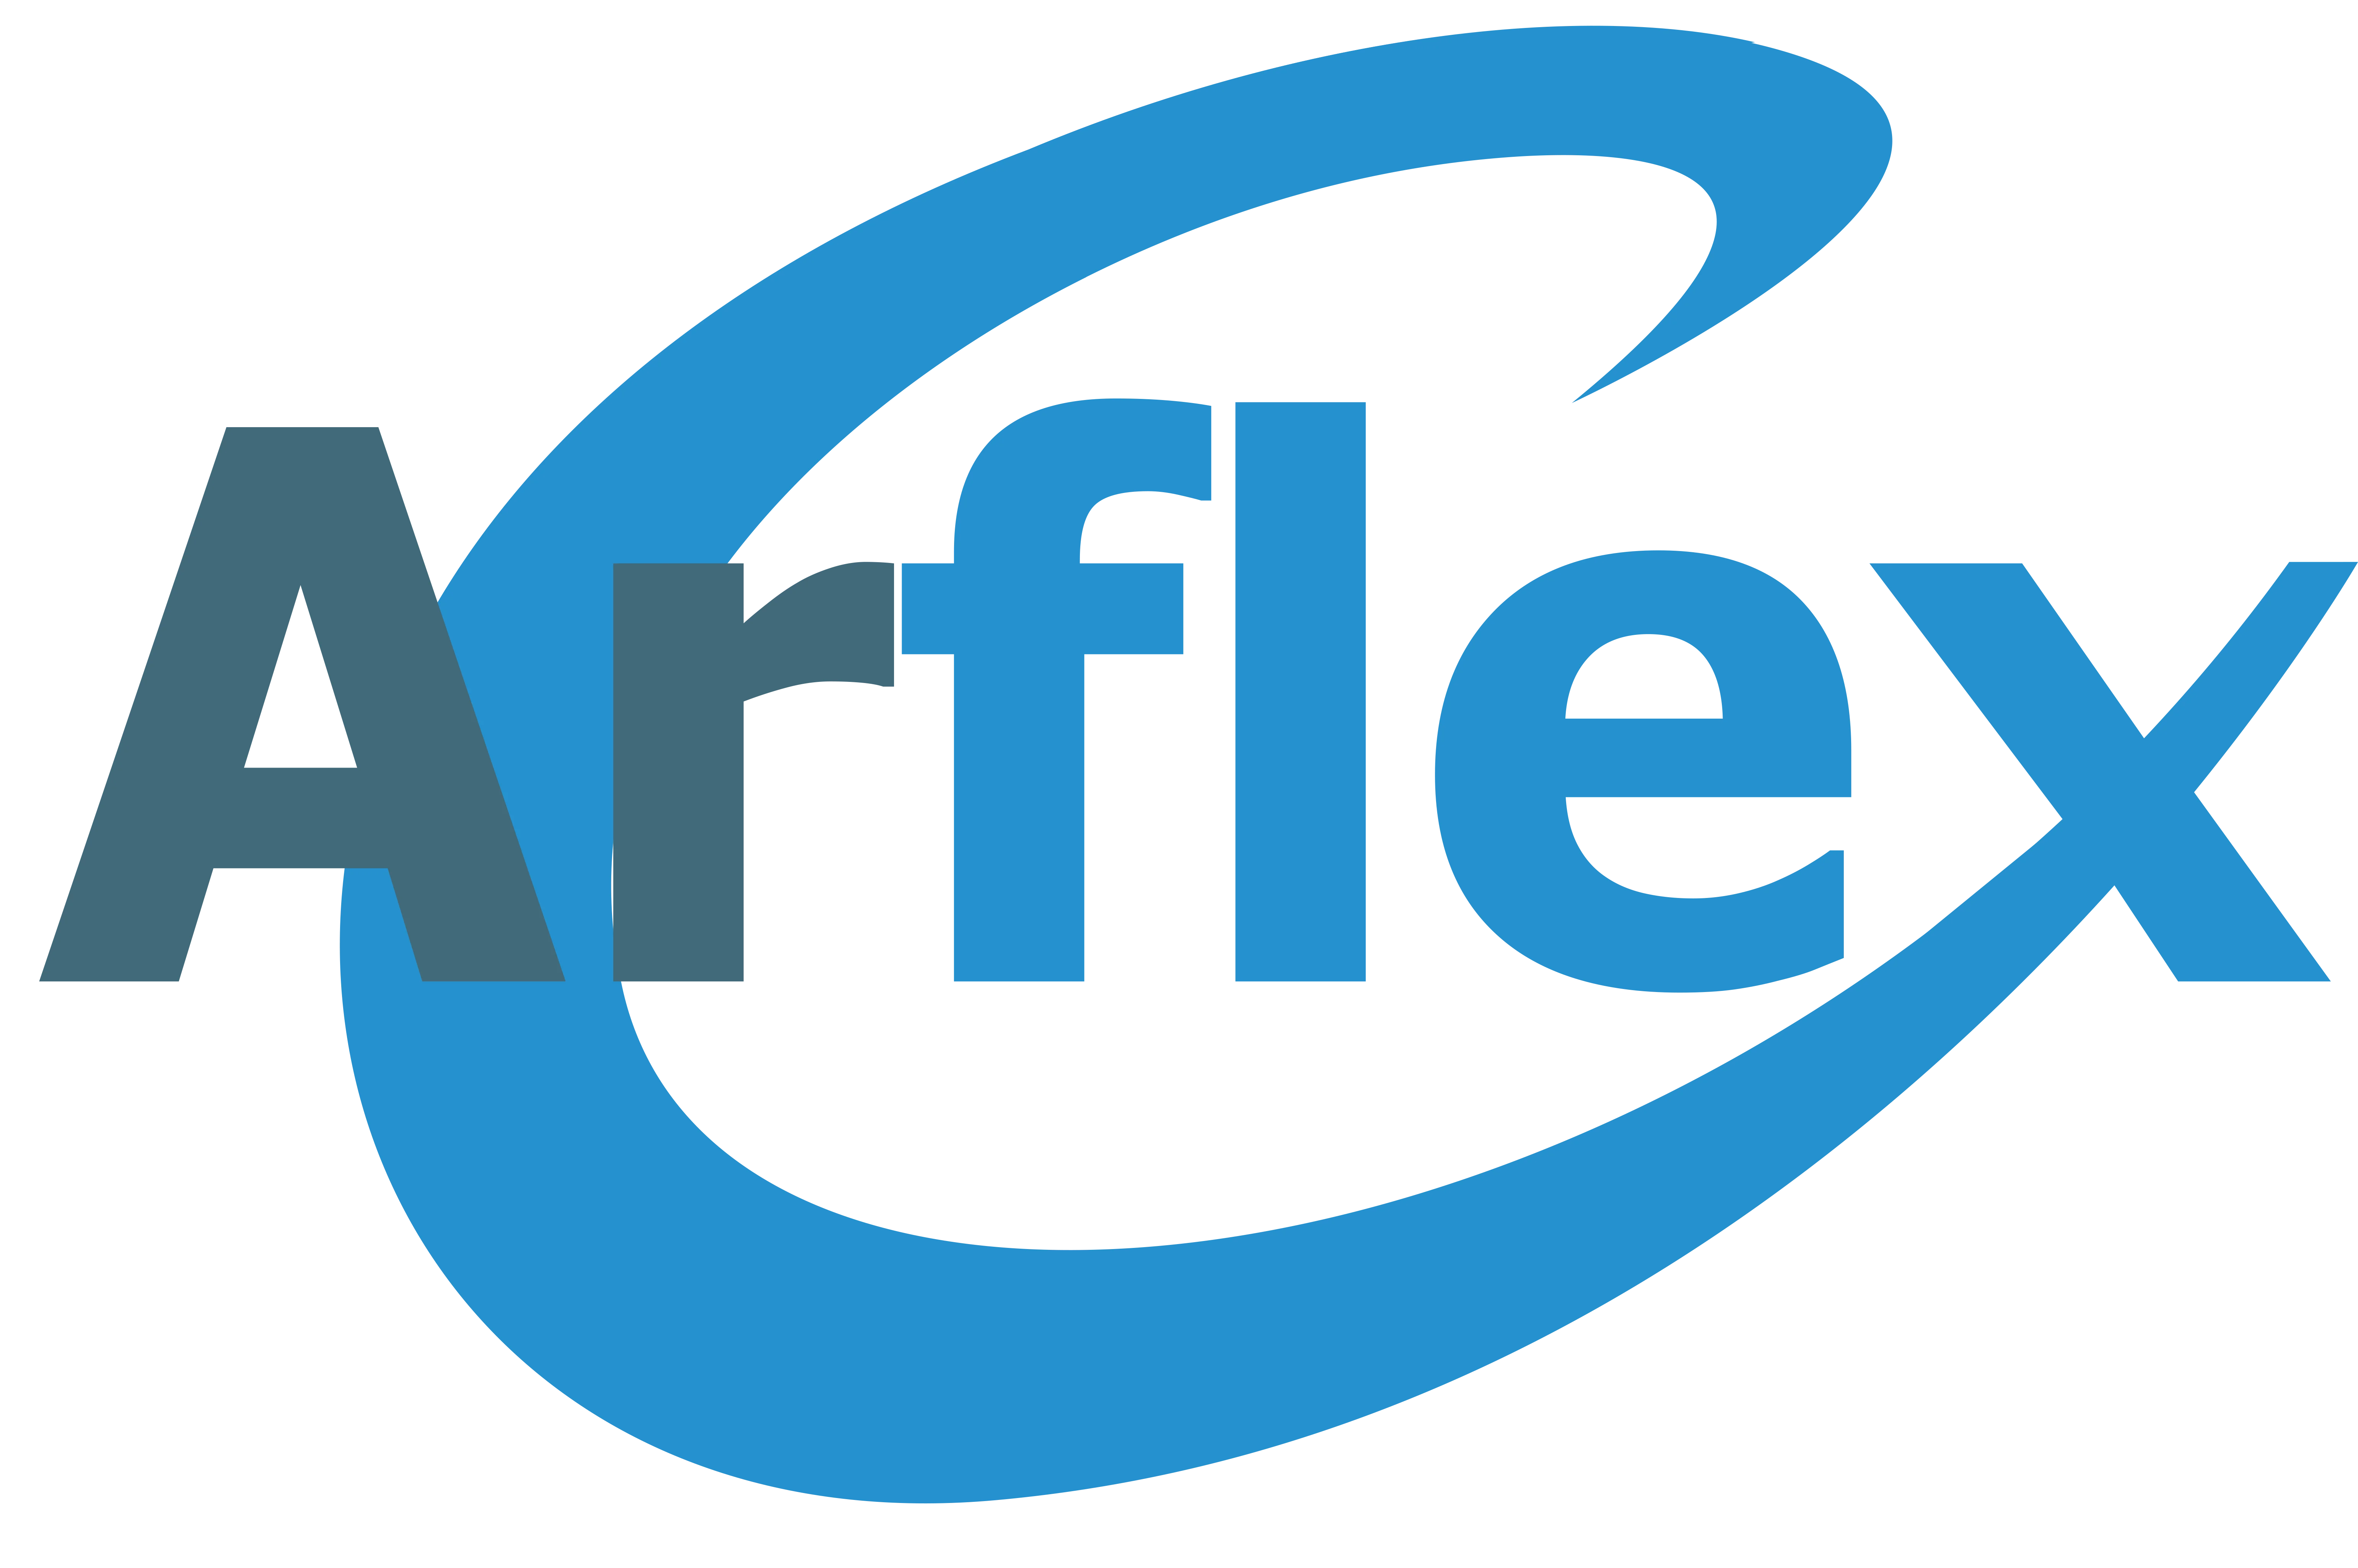 Arflex